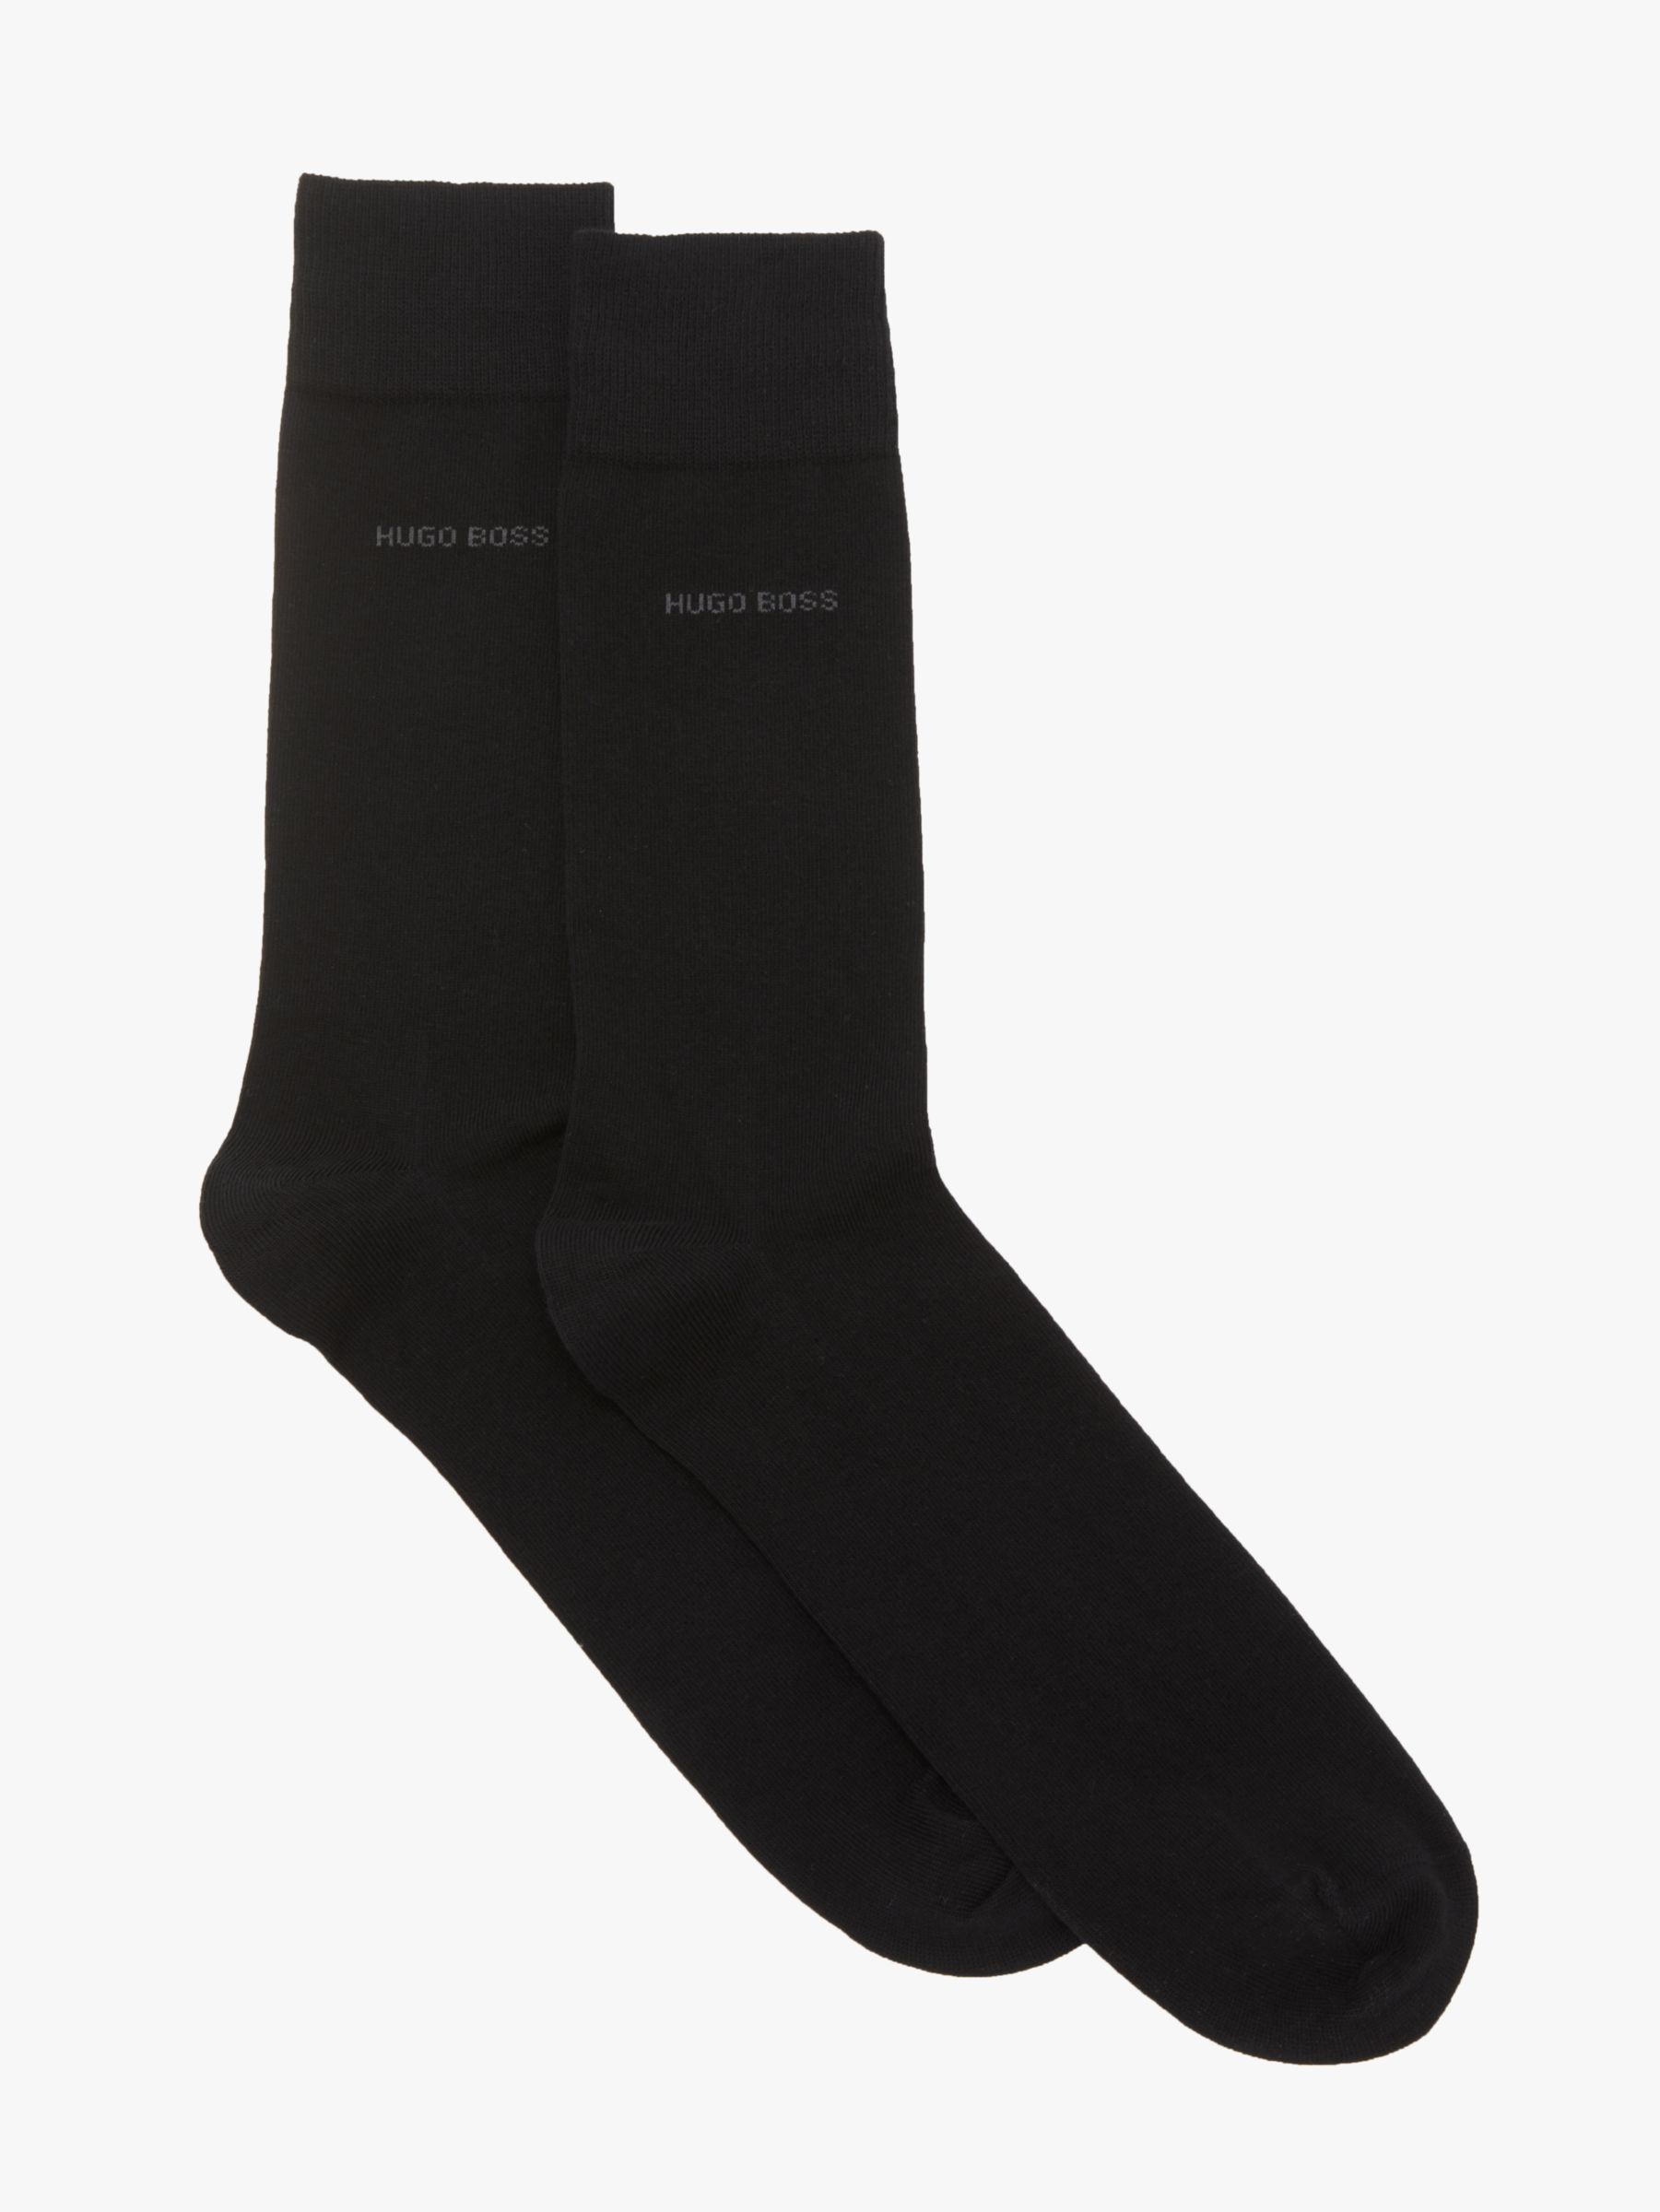 BOSS Plain Socks, Pack of 2, Black at John Lewis & Partners